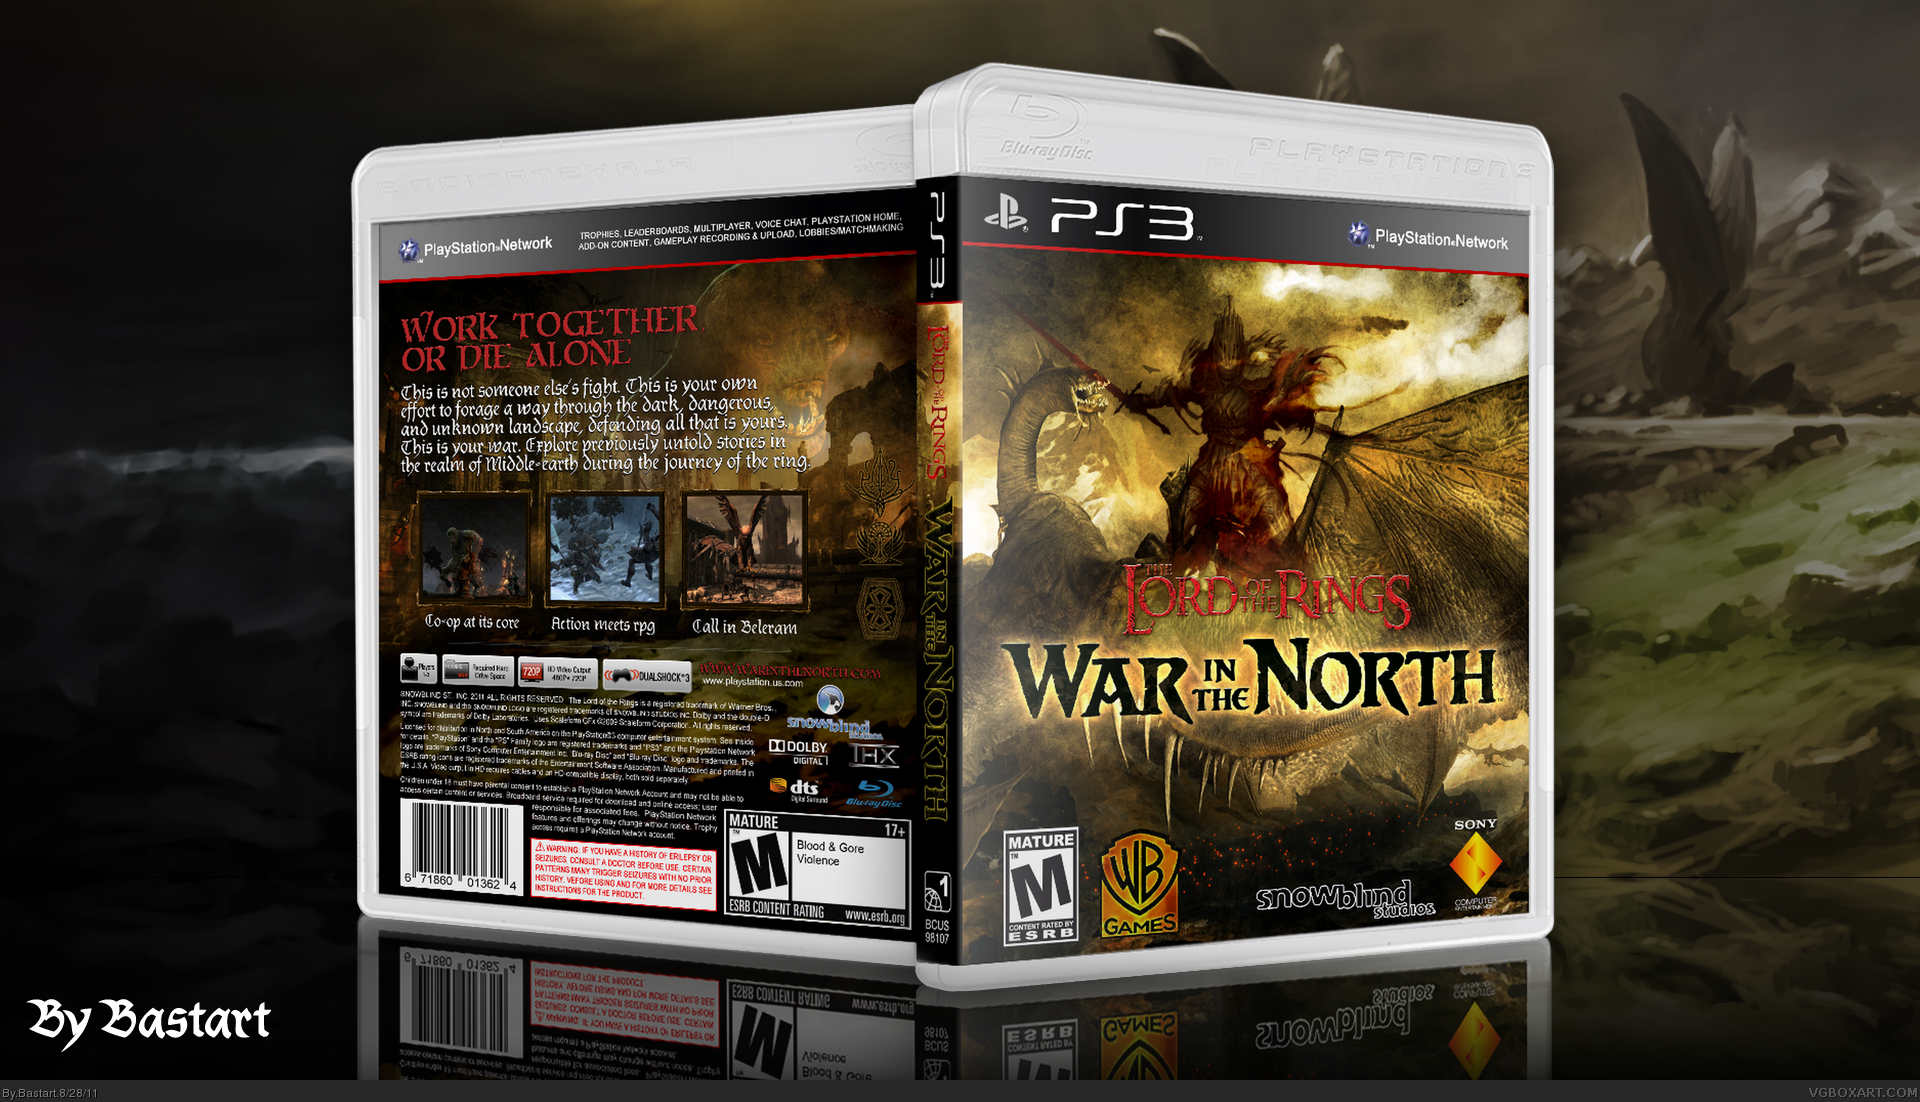 LOTR: War in the North box cover